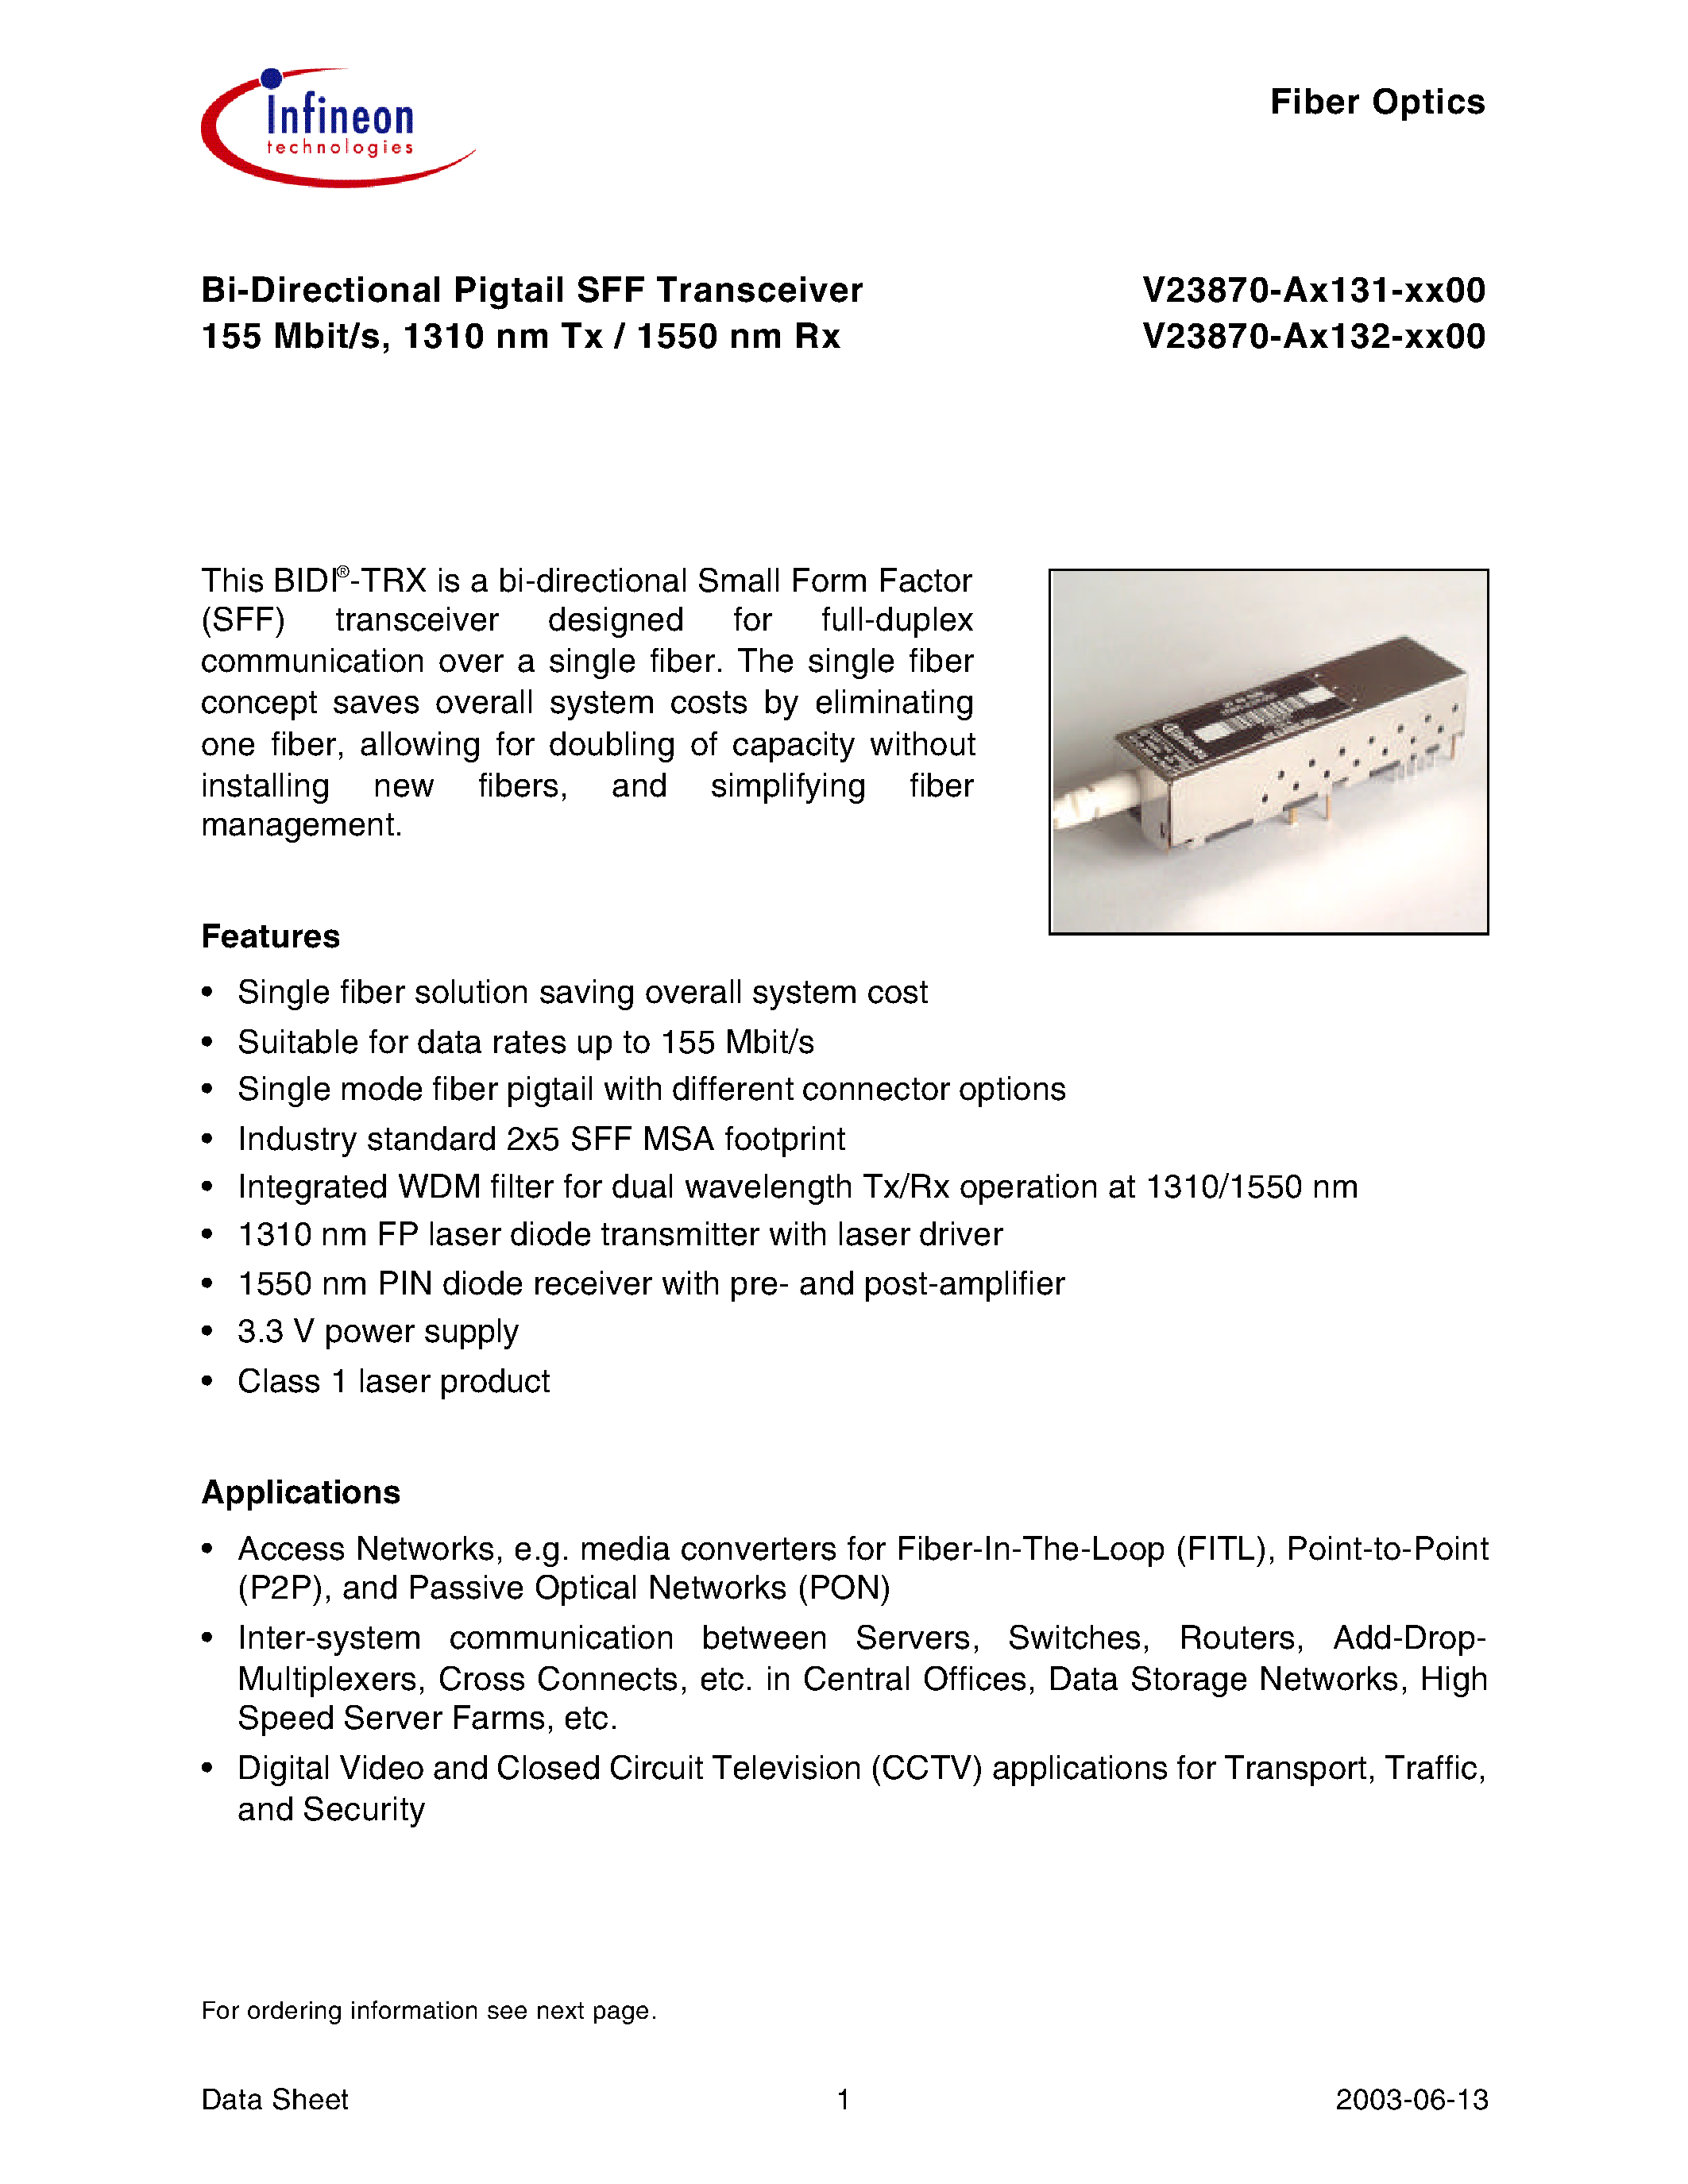 Даташит V23870-A3132-A500 - Bi-Directional Pigtail SFF Transceiver 155 Mbit/s/ 1310 nm Tx / 1550 nm Rx страница 1